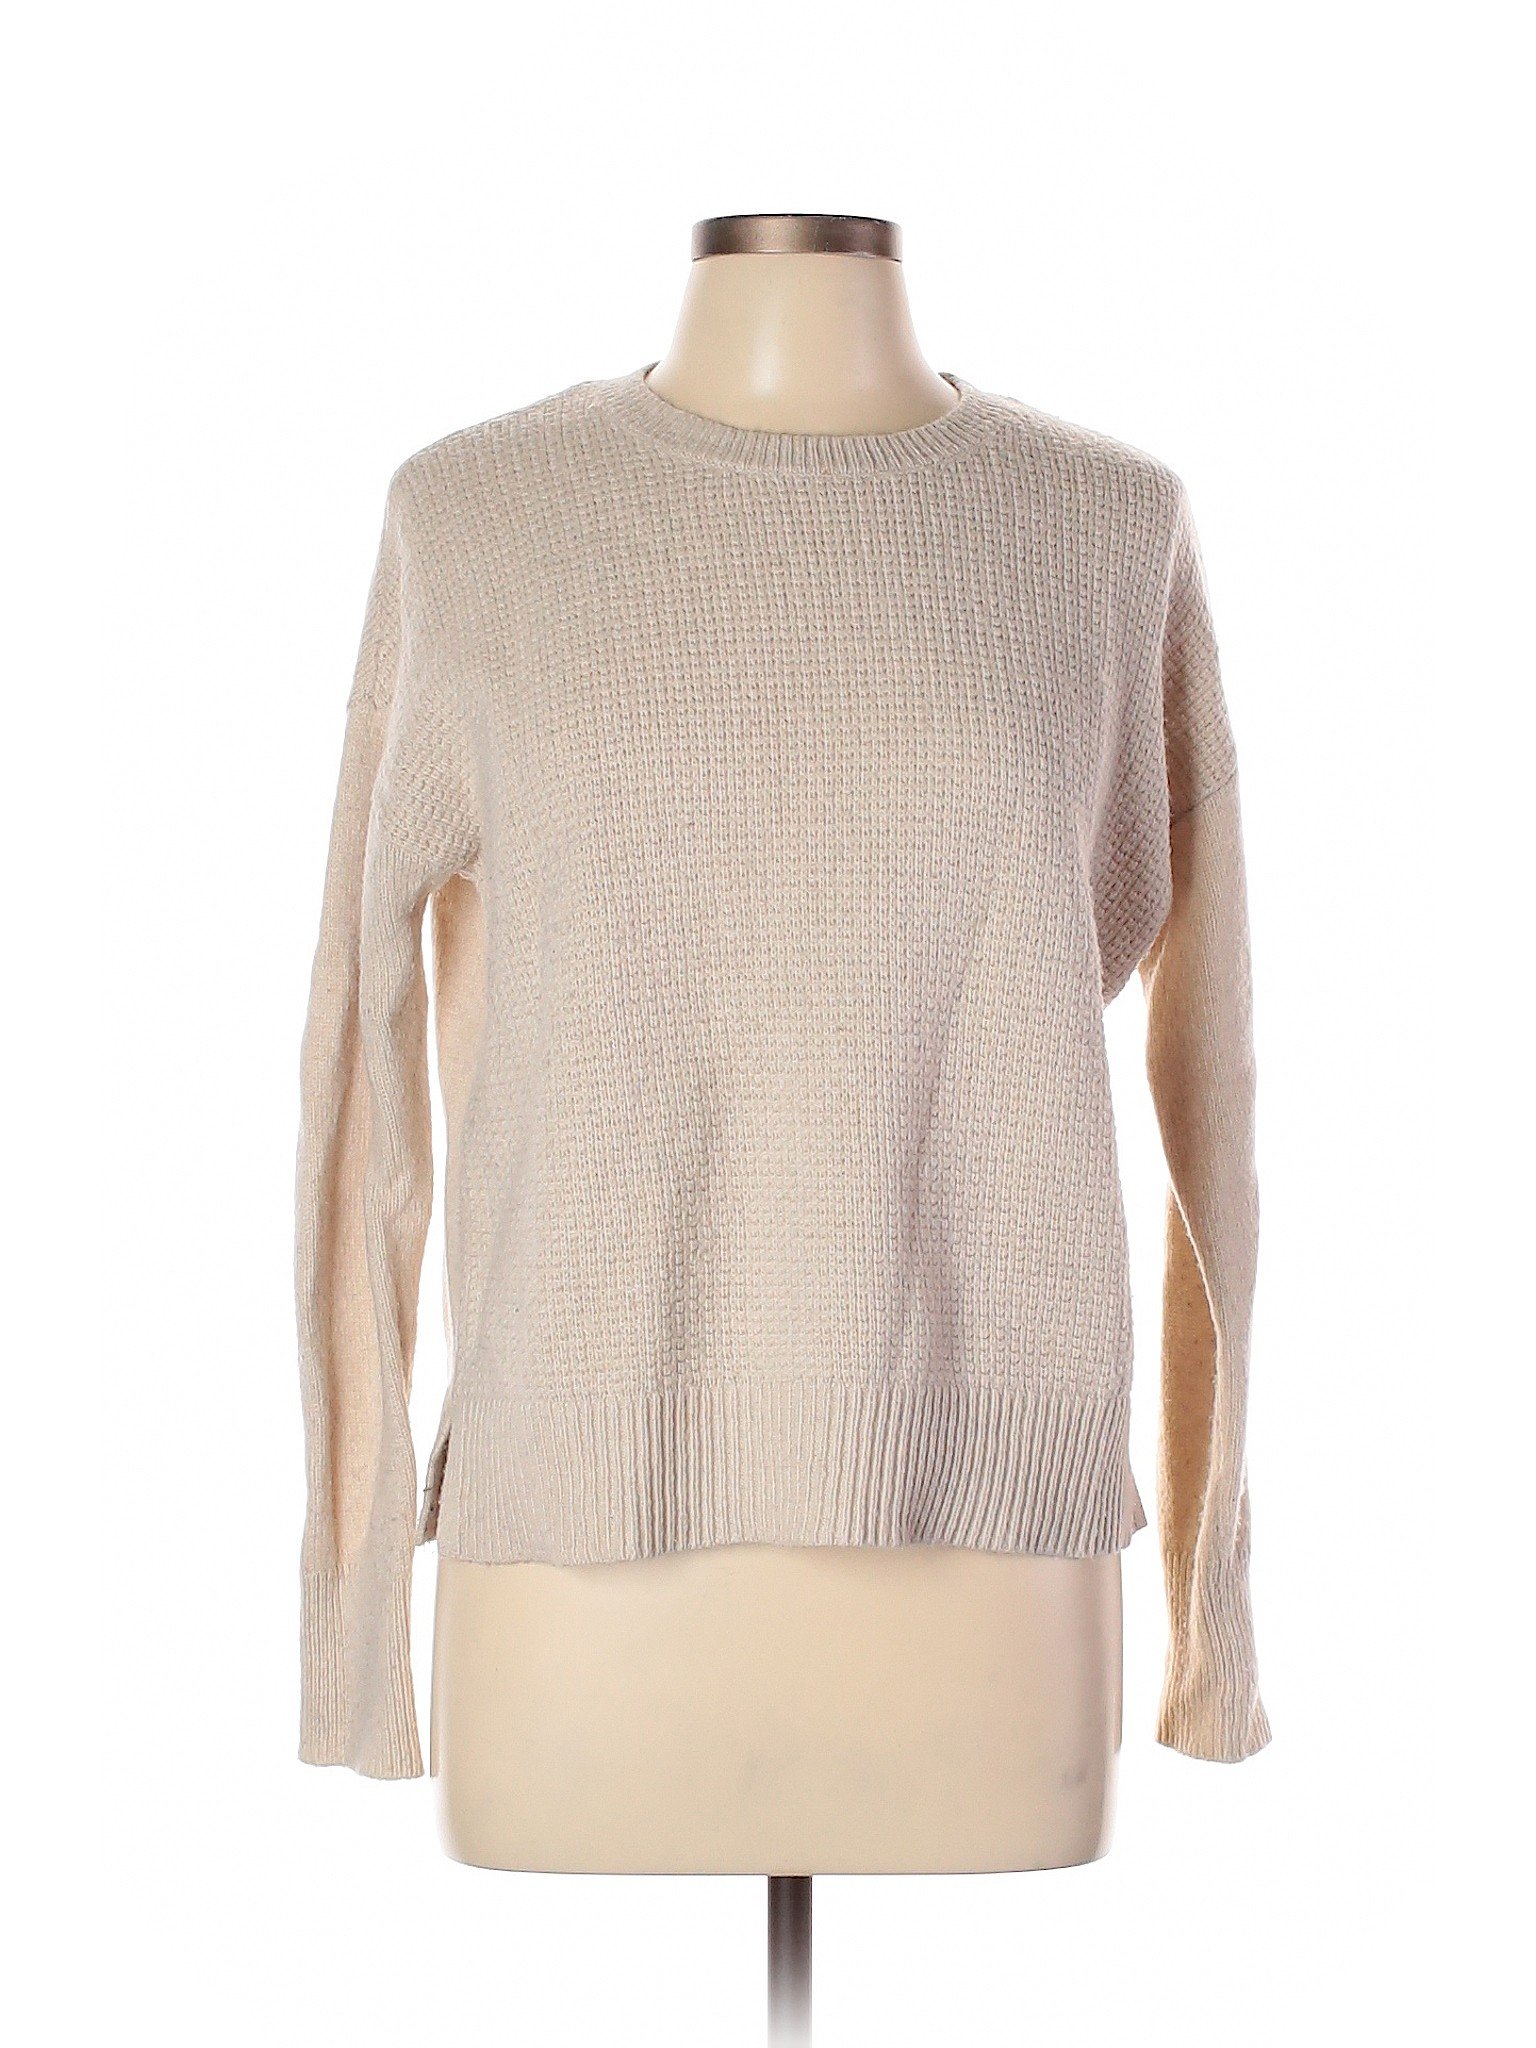 Gap Women Brown Pullover Sweater L | eBay